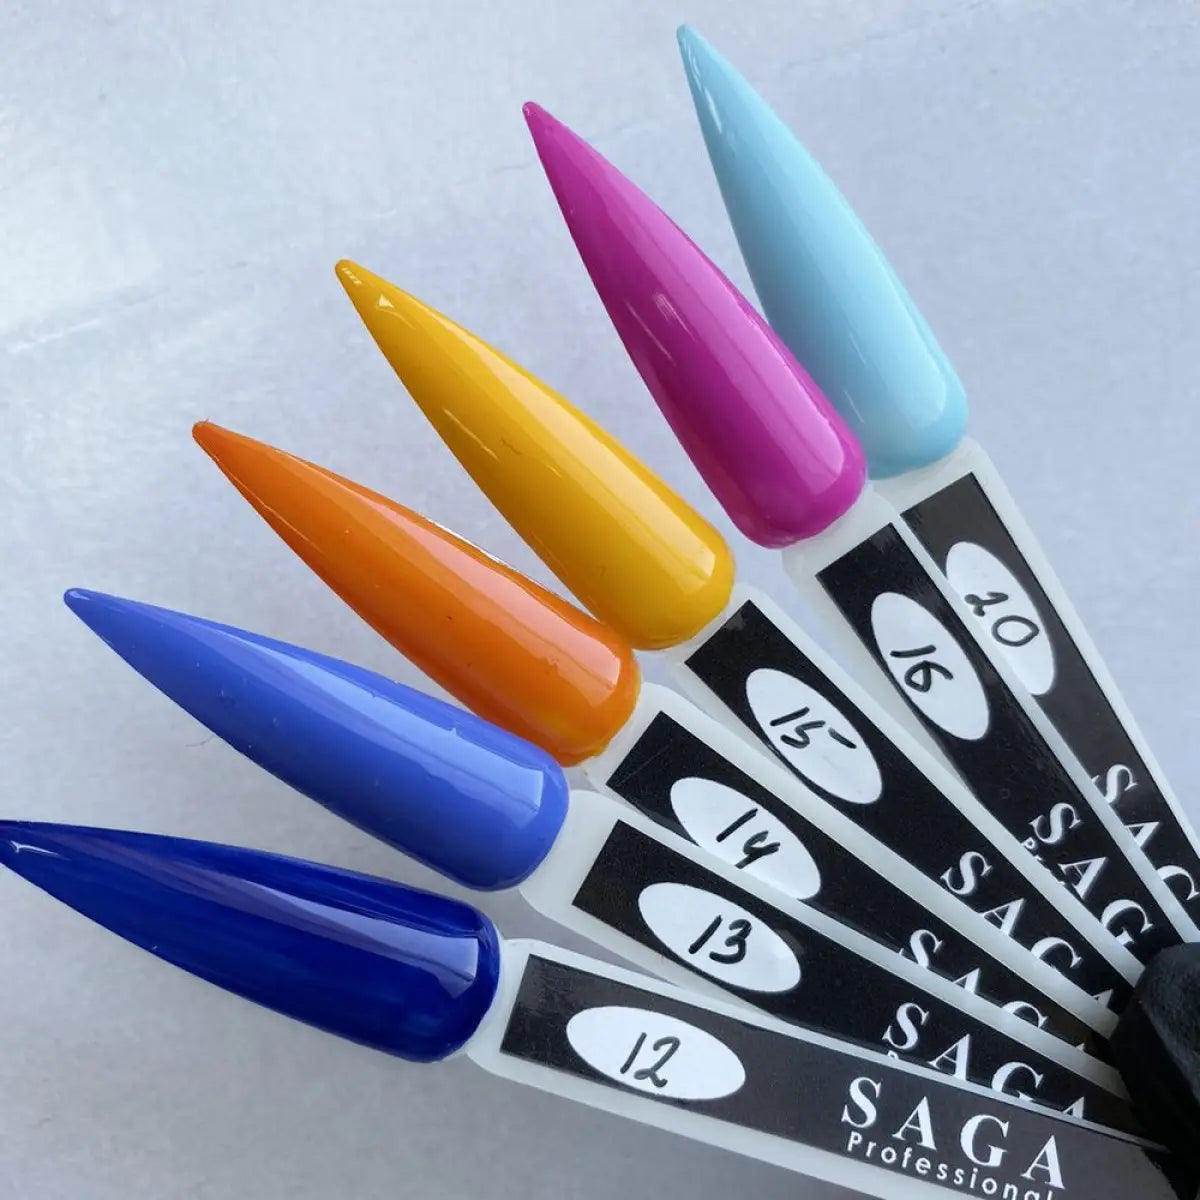 Лак для стемпінга Saga Professional Stamping № 20, 8 мл блакитний